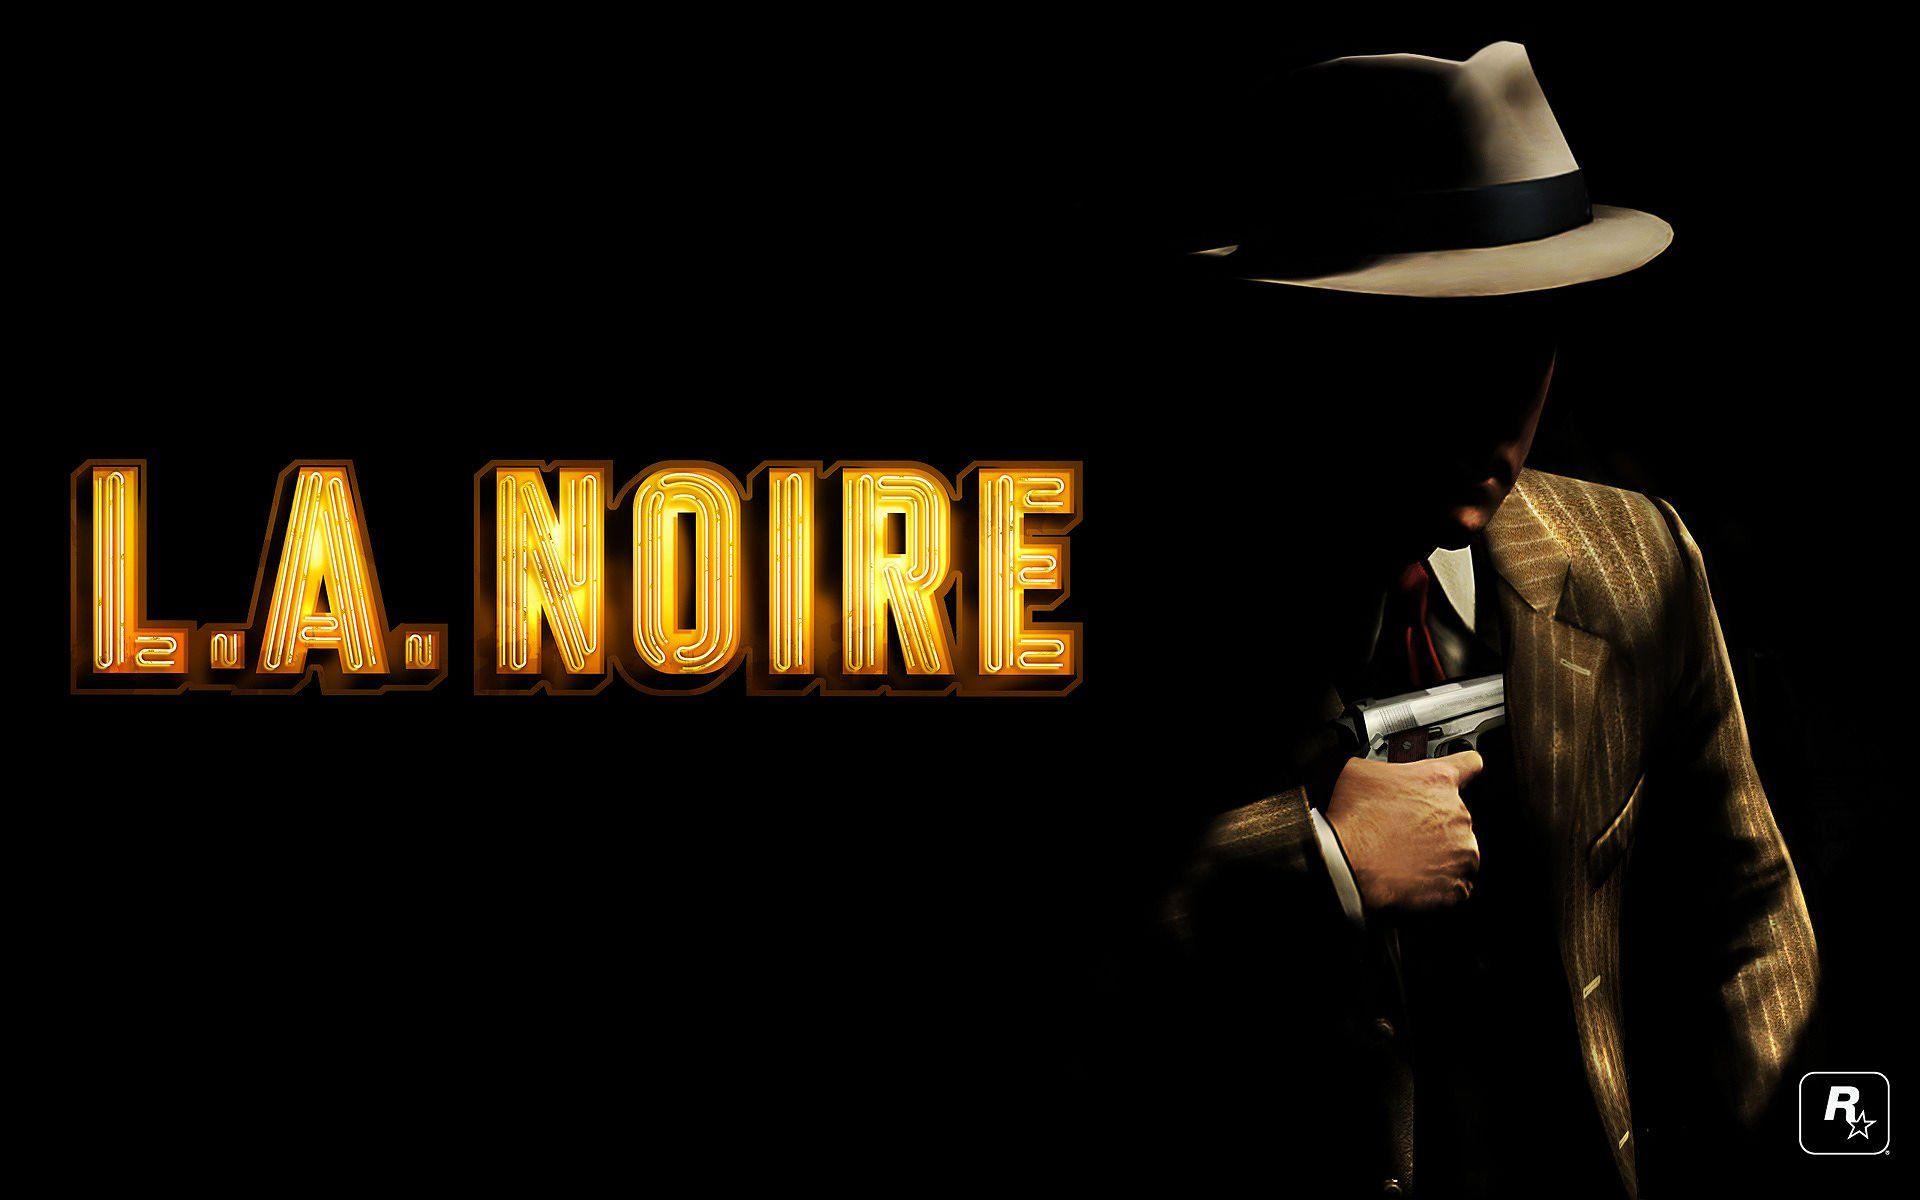 L.A. Noire HD Wallpaper